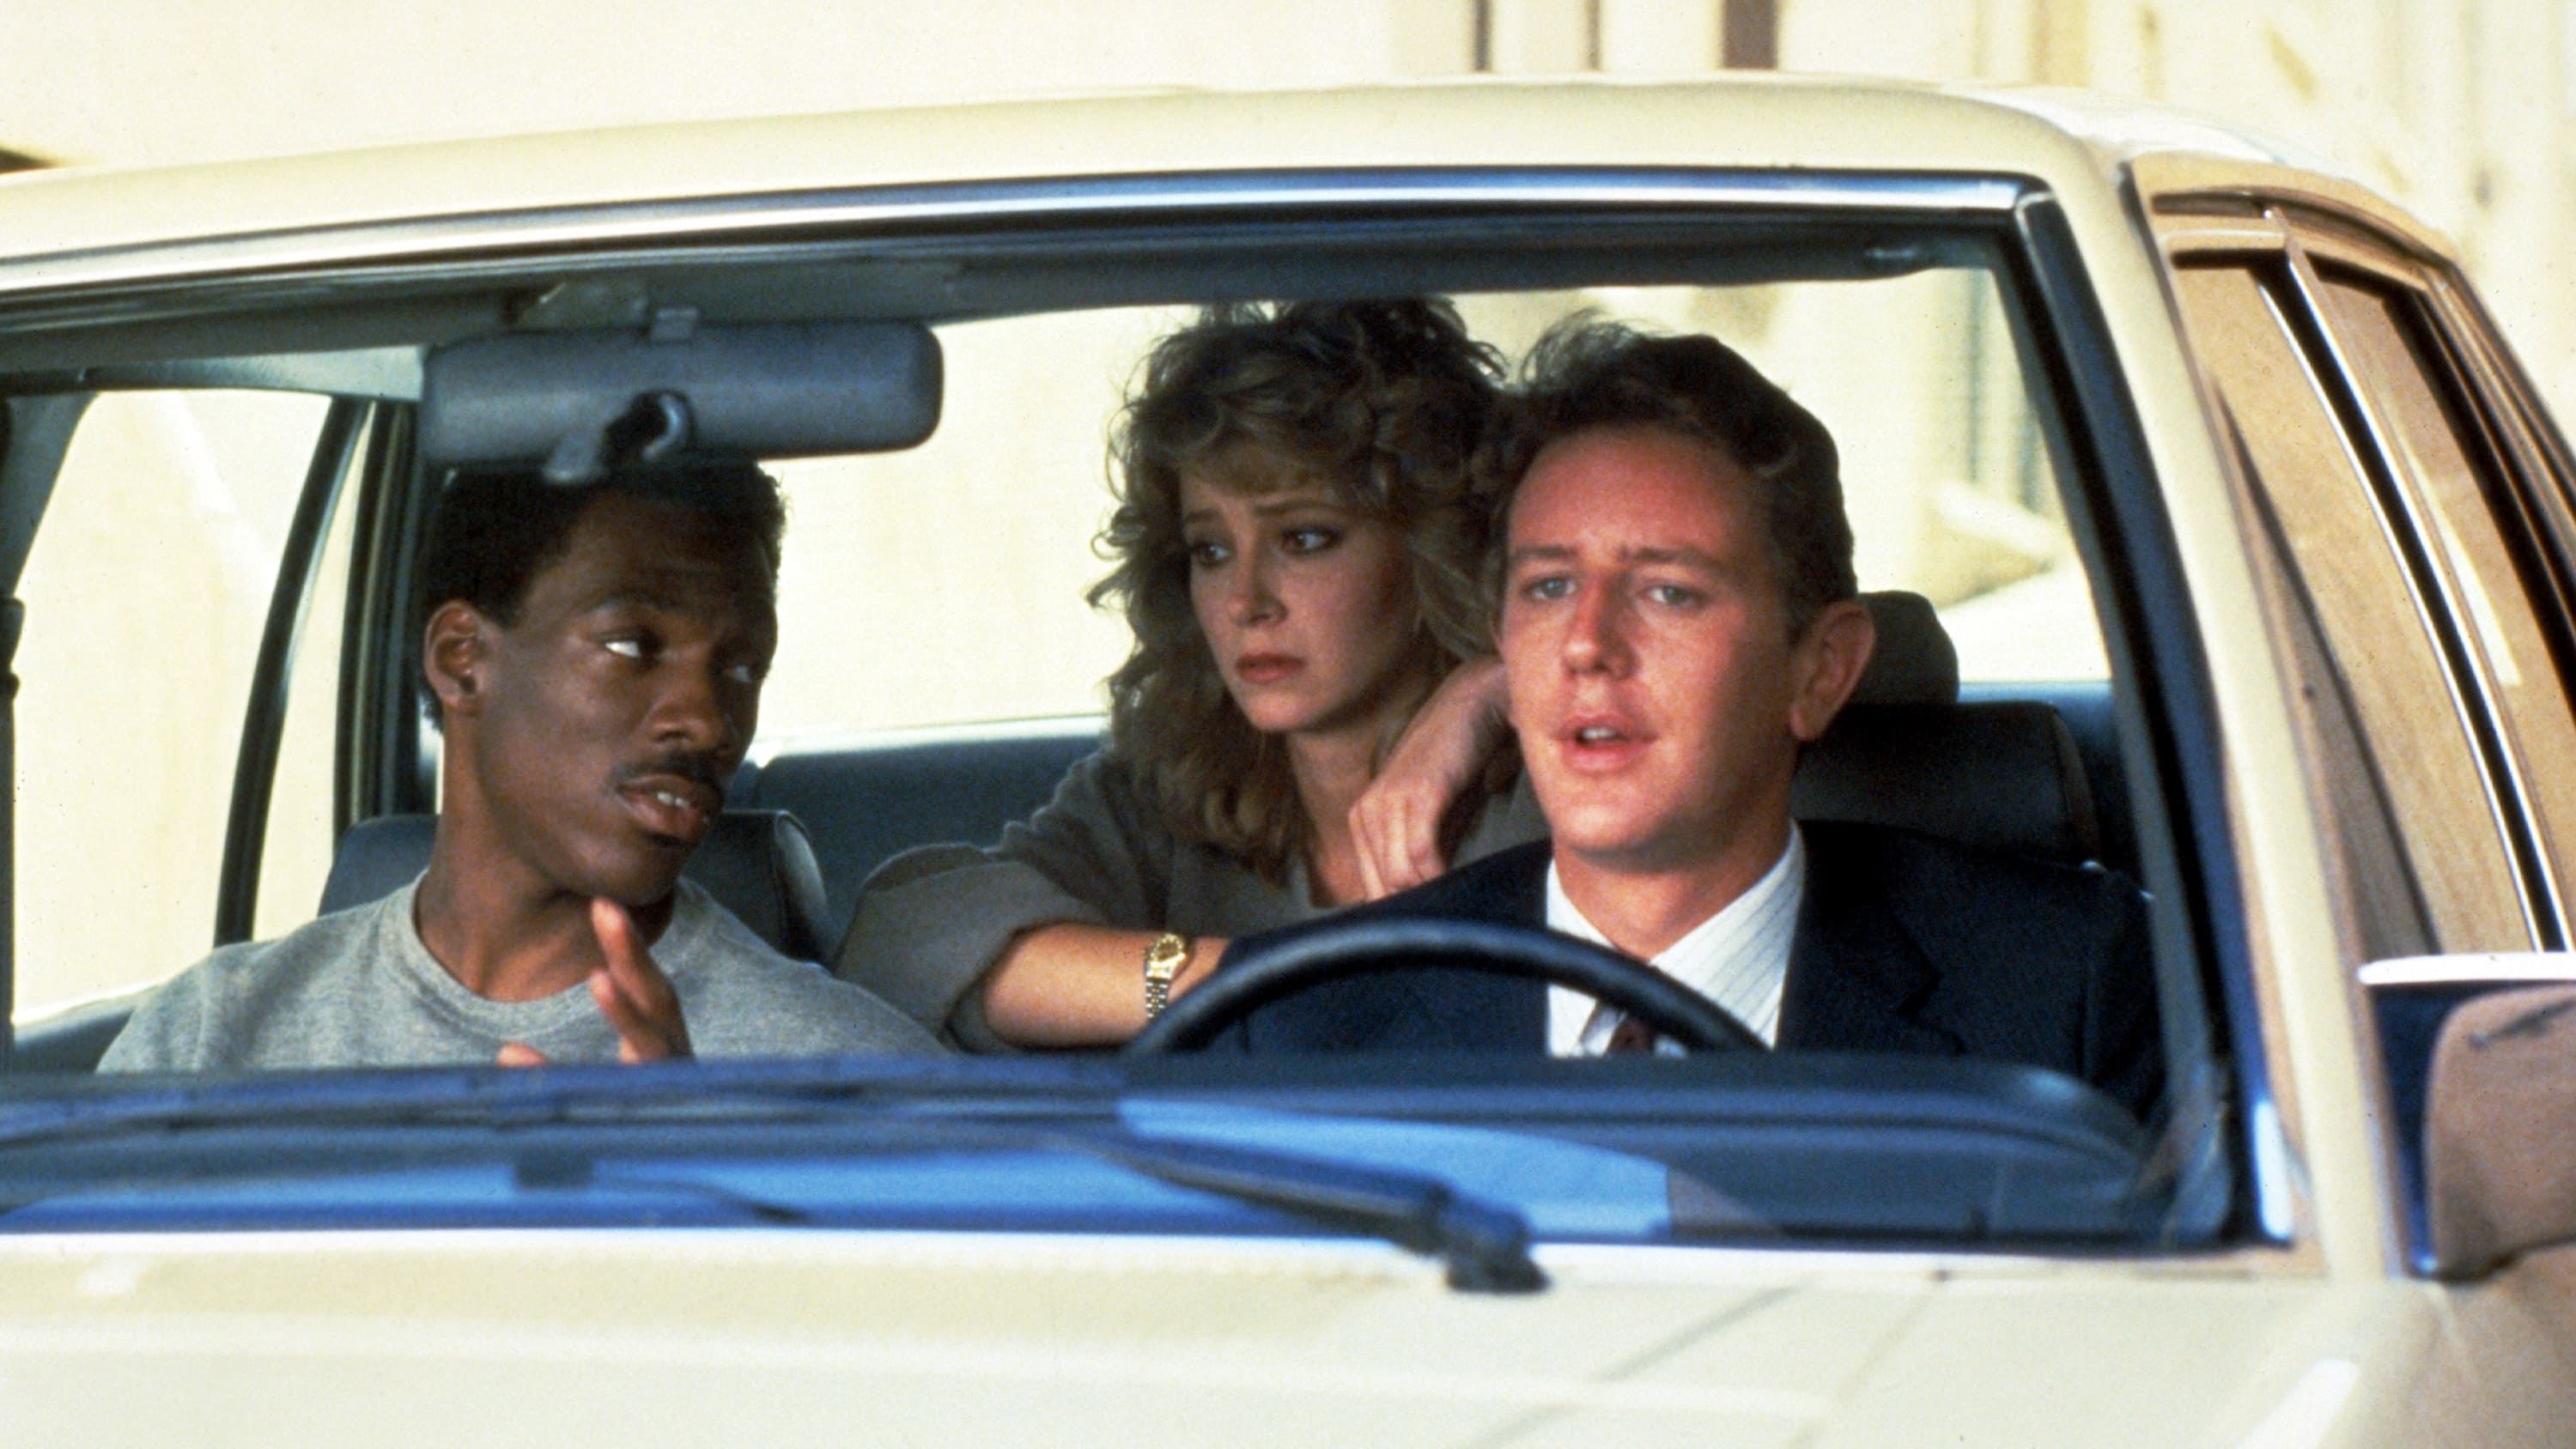 Beverly Hills Cop II (1987) โปลิศจับตำรวจ 2 